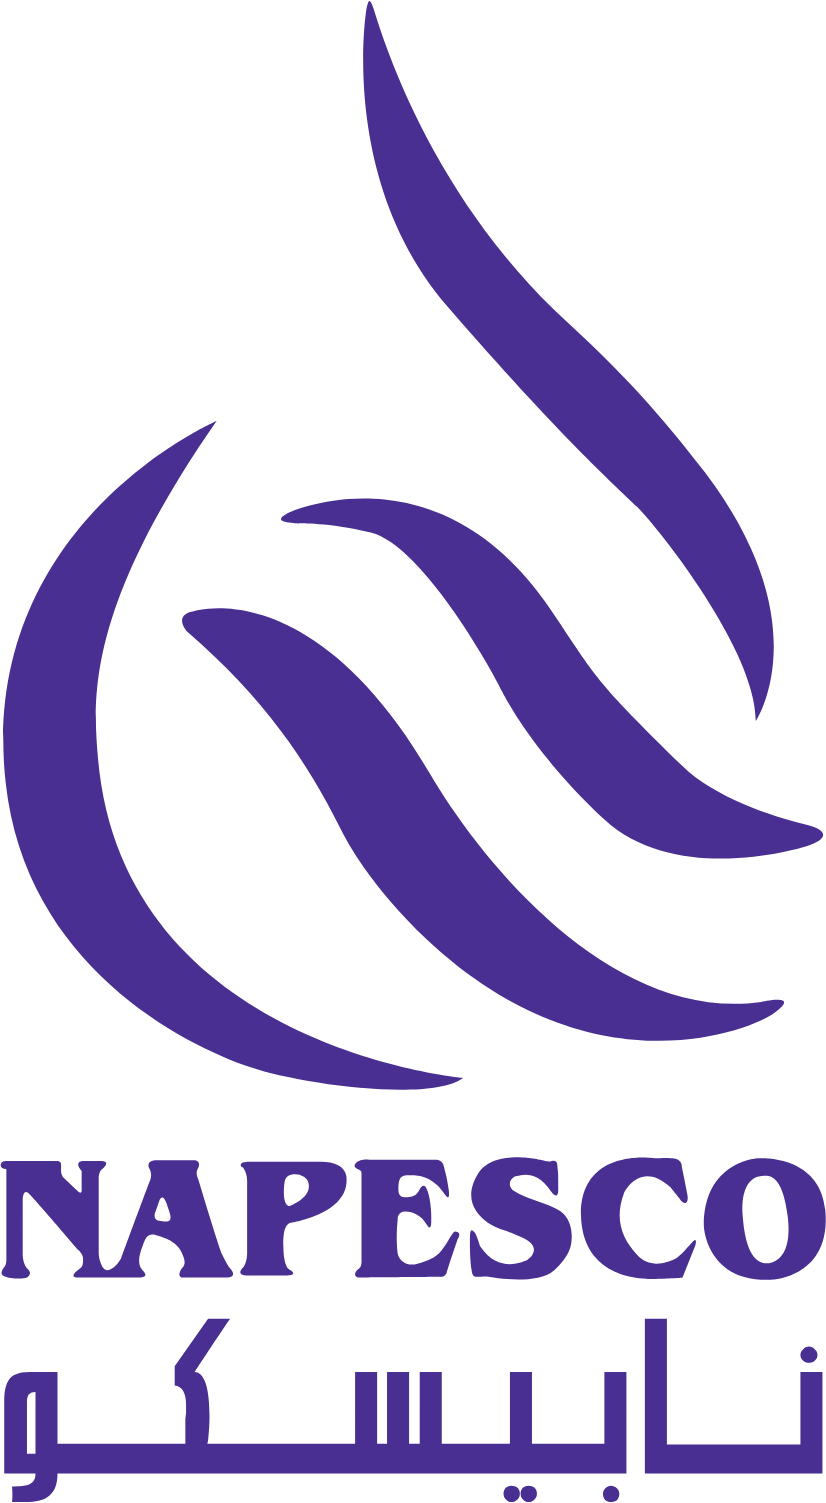 National Petroleum Services Company logo large (transparent PNG)